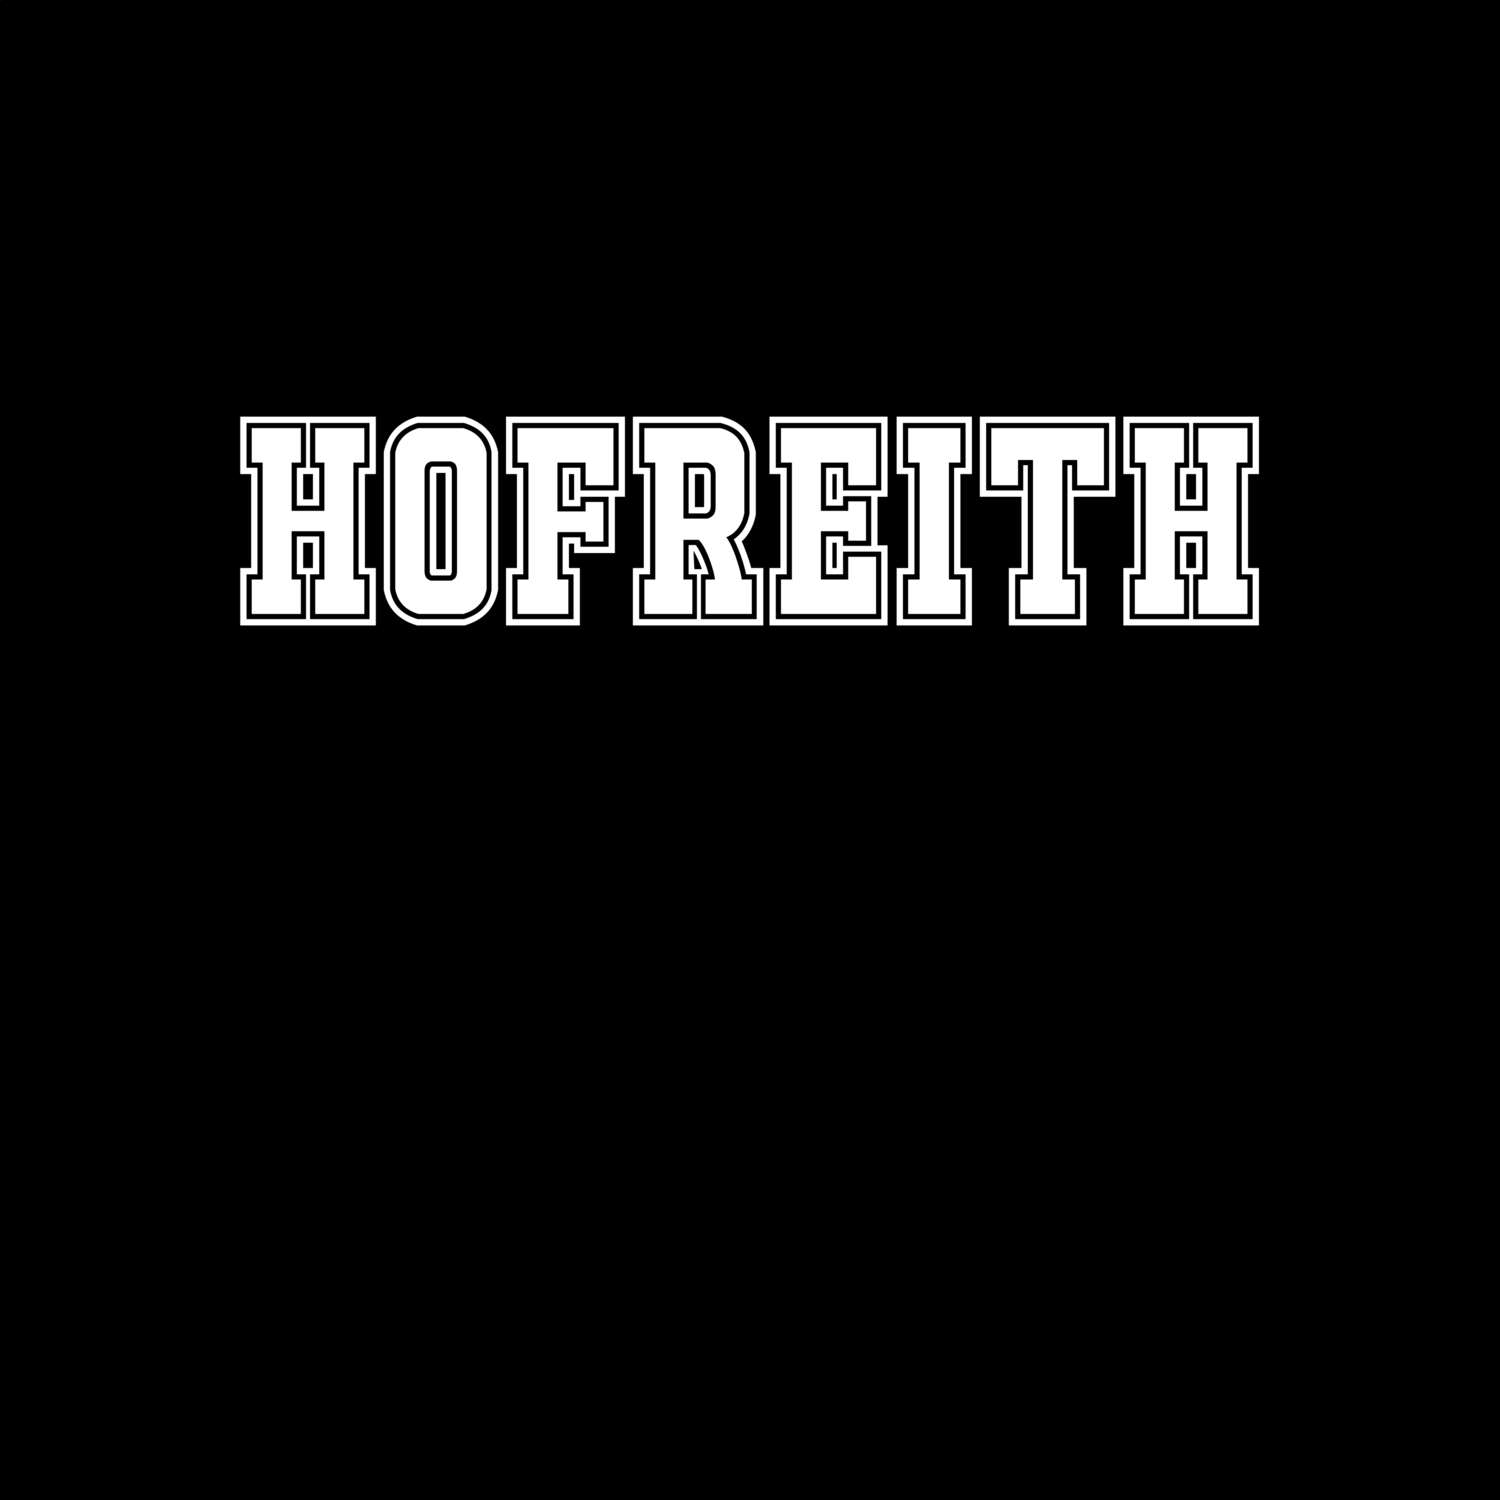 Hofreith T-Shirt »Classic«